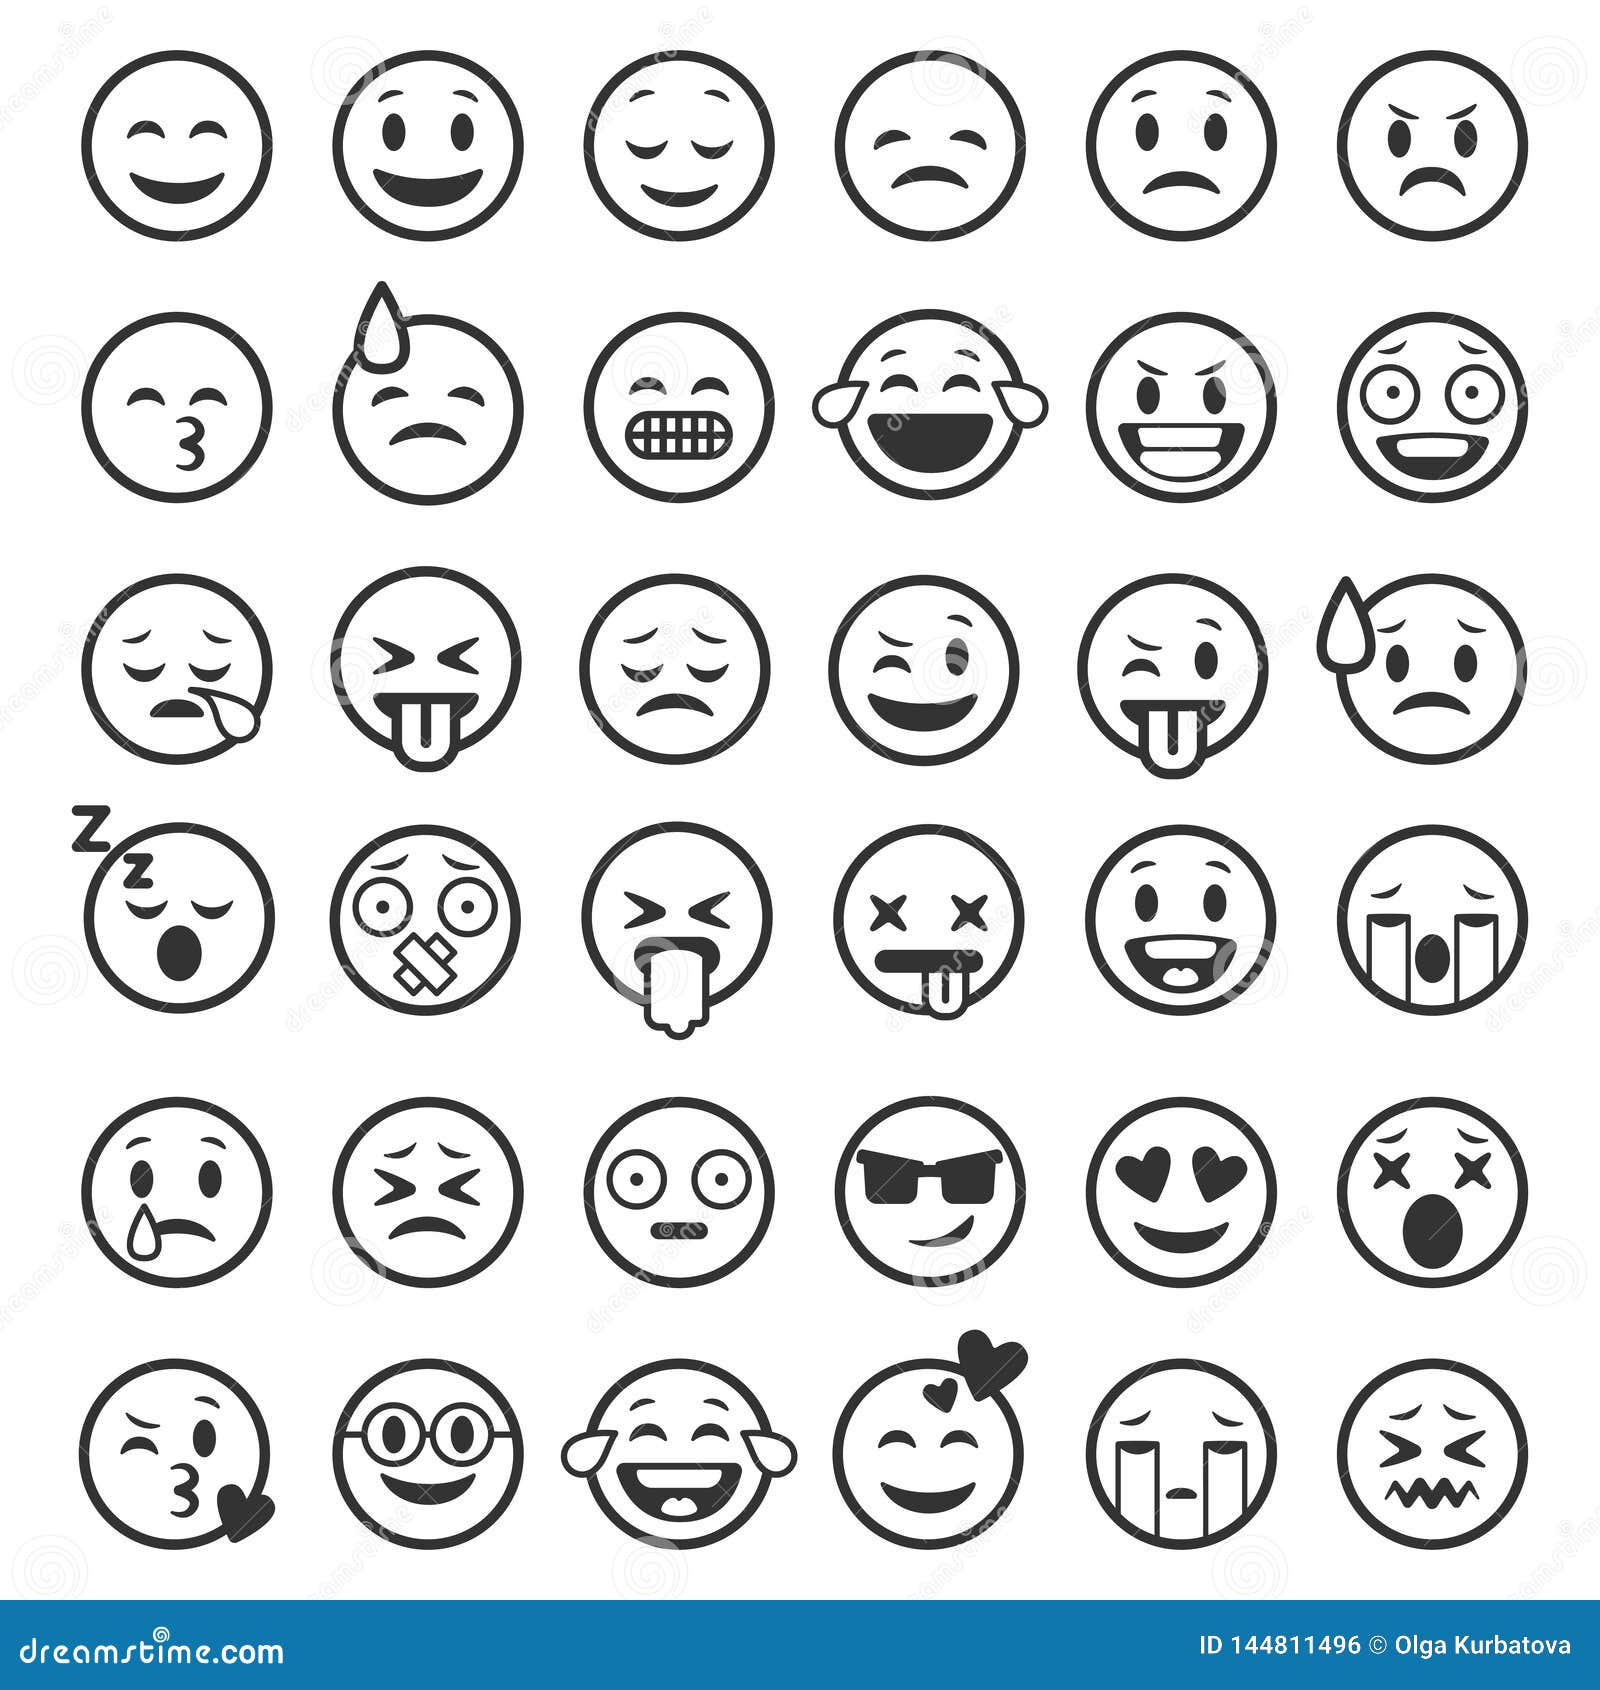 emoticons outline. emoji faces emoticon funny smile line black icons expression smiley facial people humor mood, flat